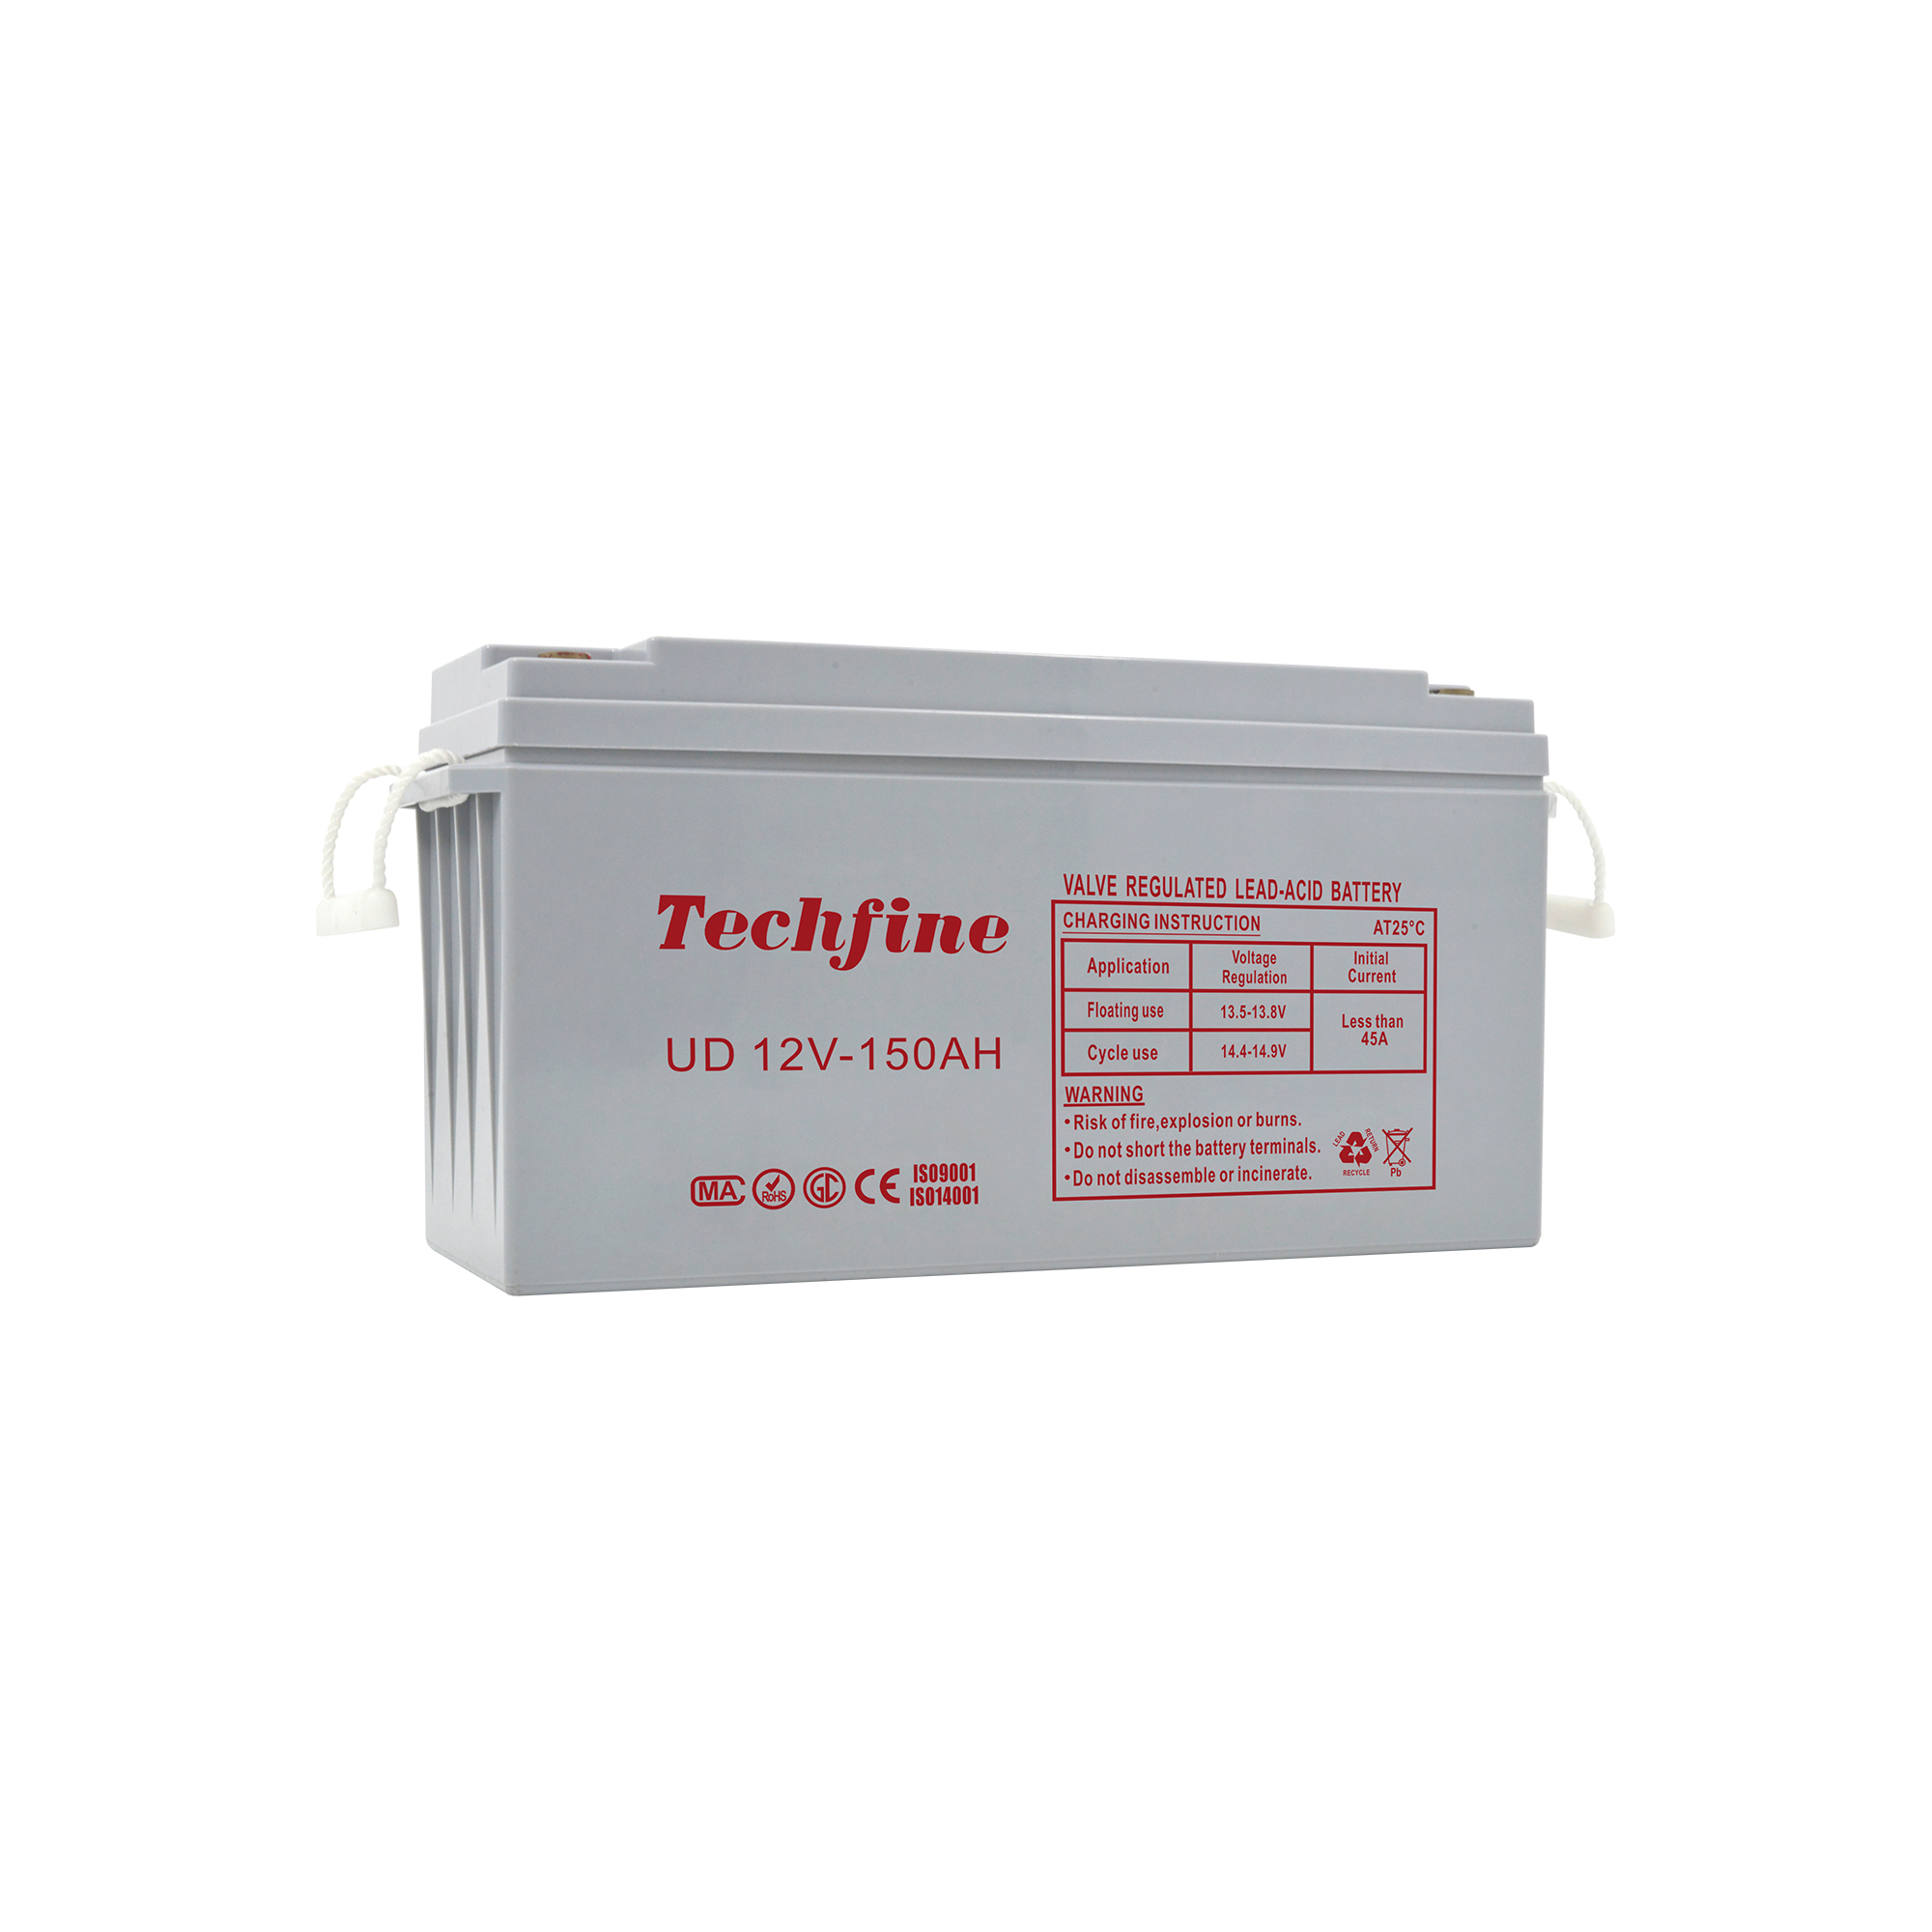 Techfine solar battery 12V 150AH Lead Acid Battery off grid